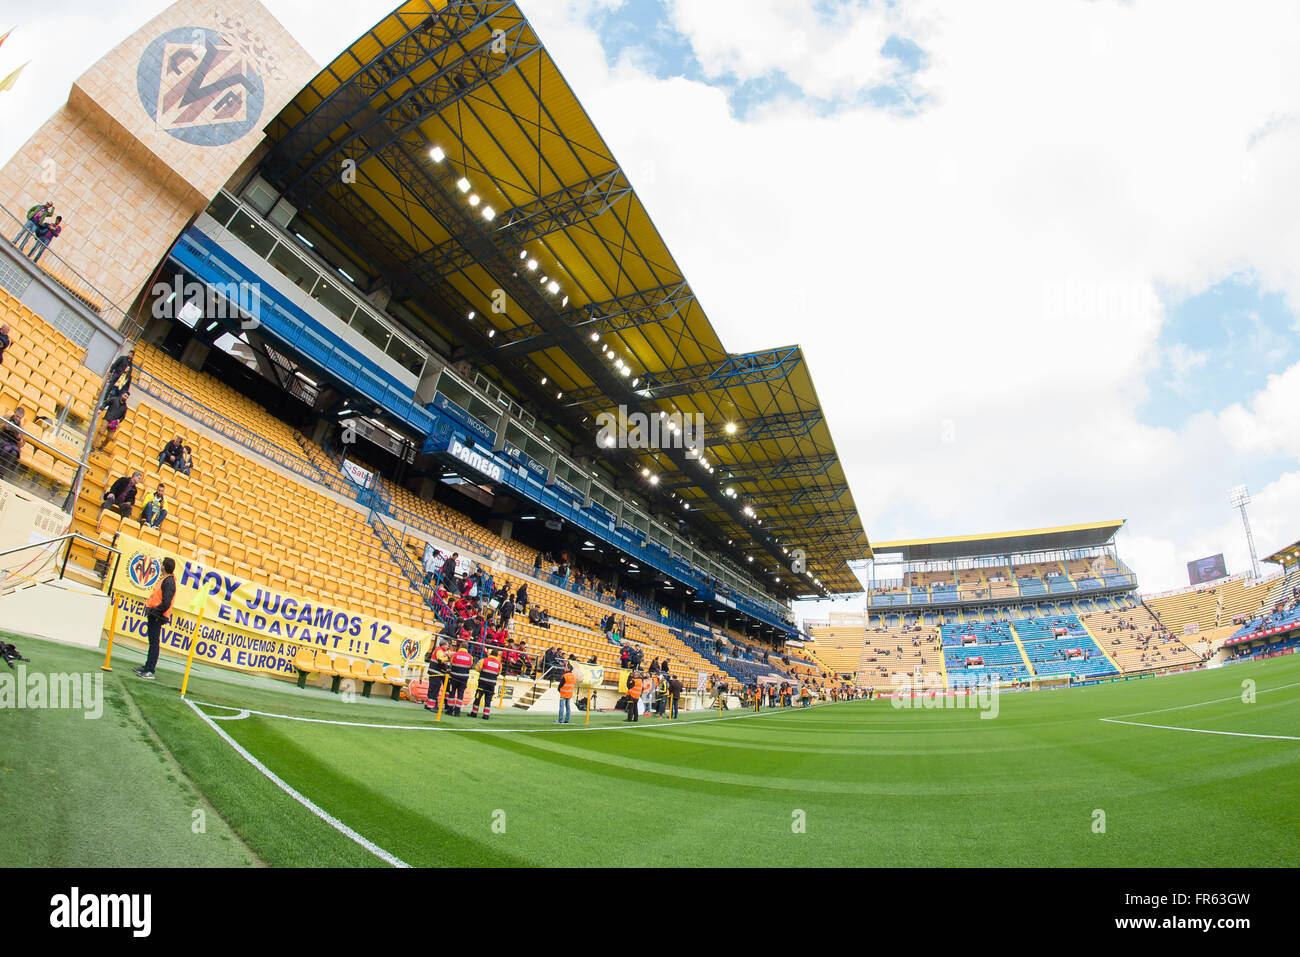 Villarreal stadium hi-res stock photography and images - Alamy